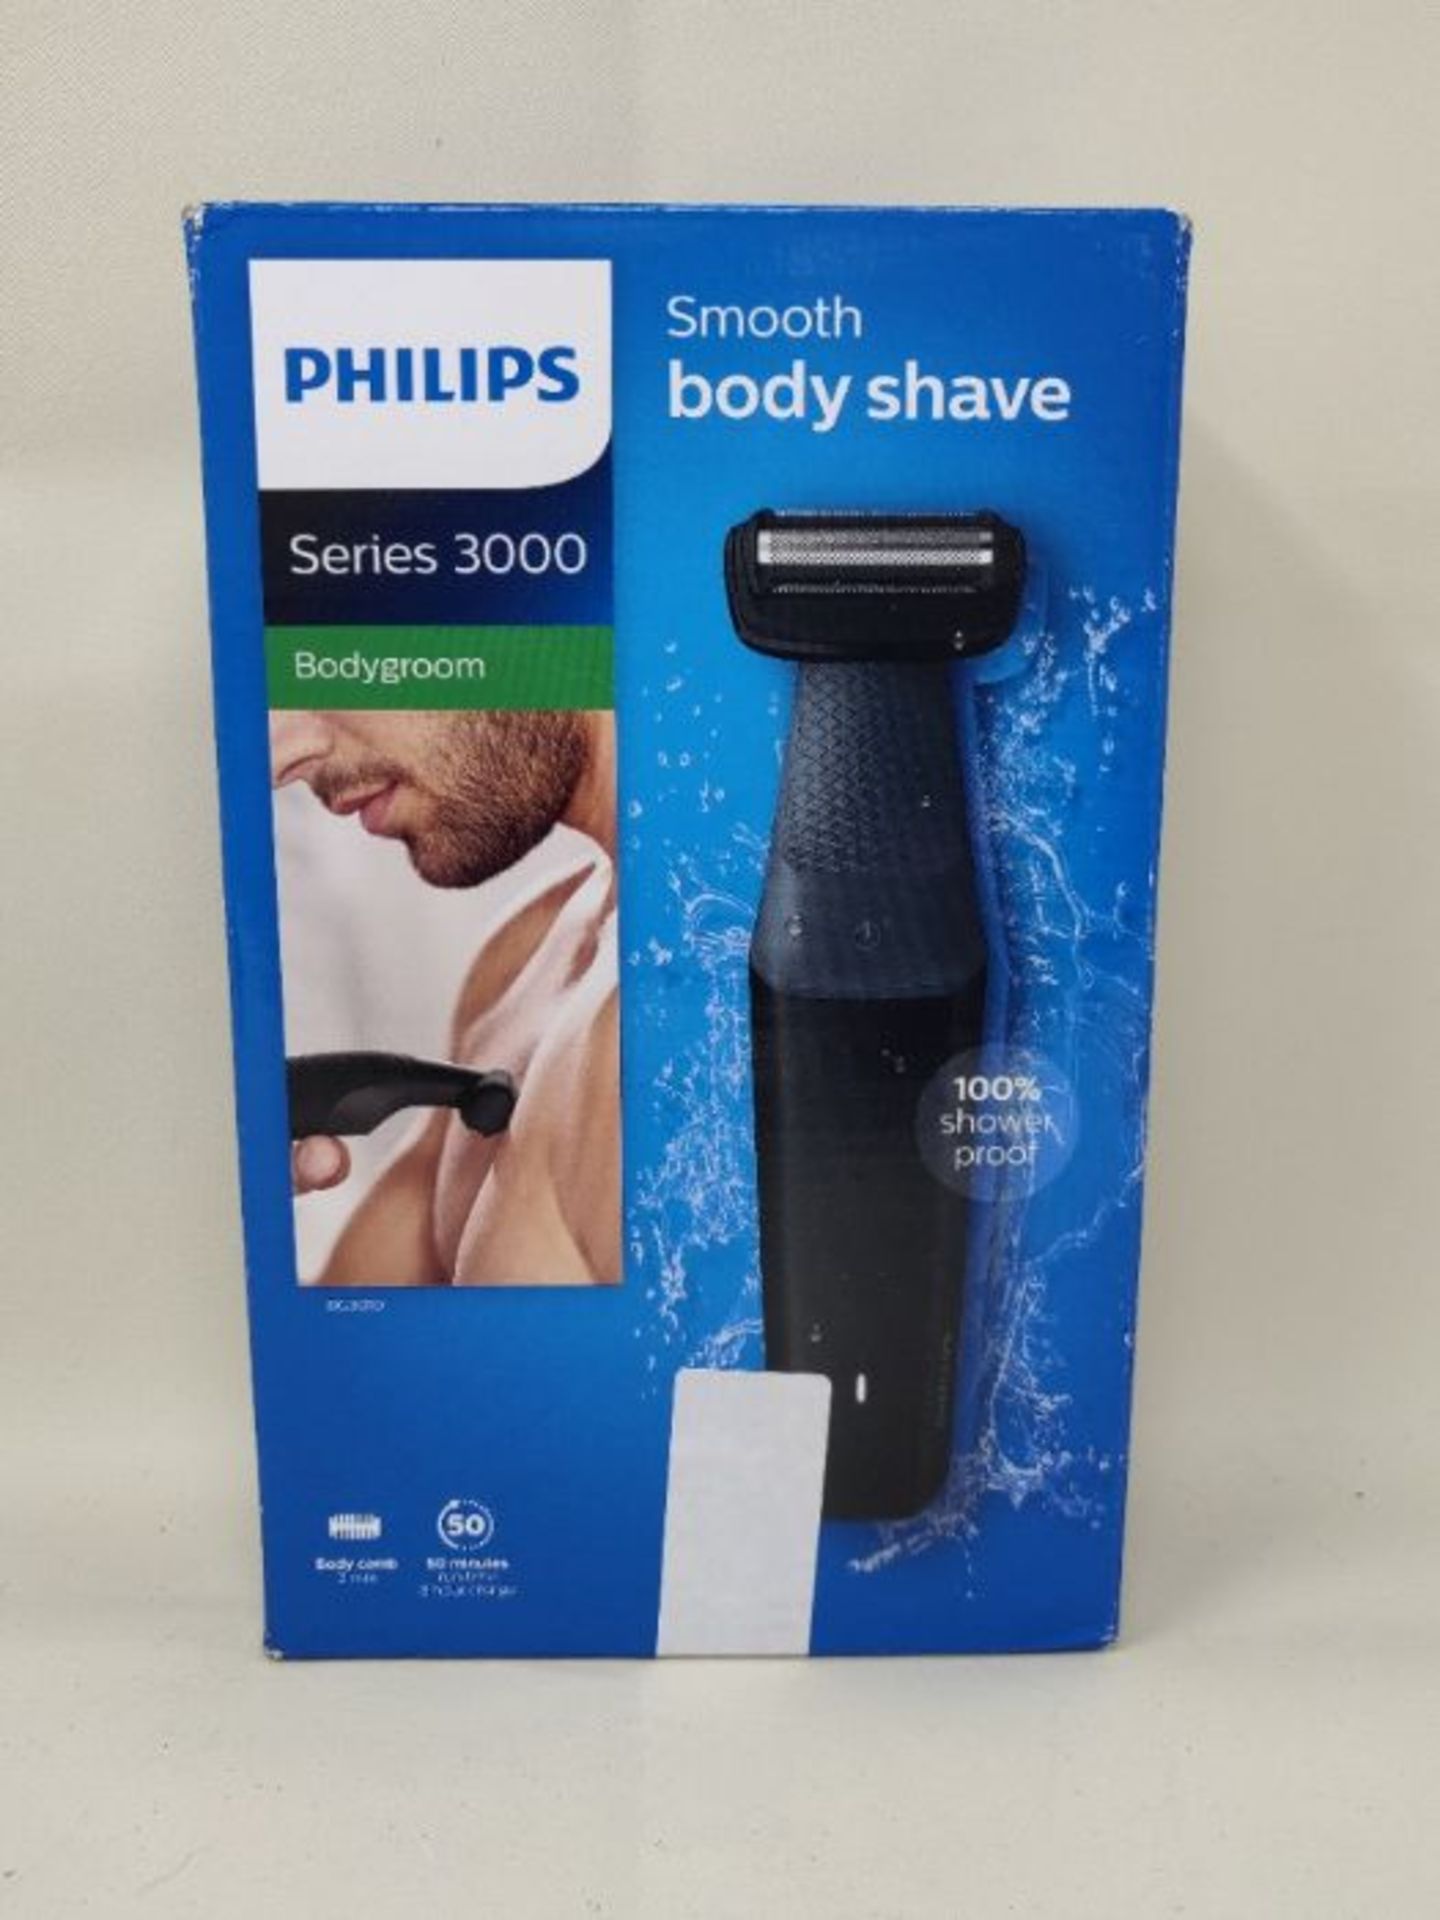 Philips Series 3000 Showerproof Body Groomer with Skin Comfort System - BG3010/13 - Image 2 of 3